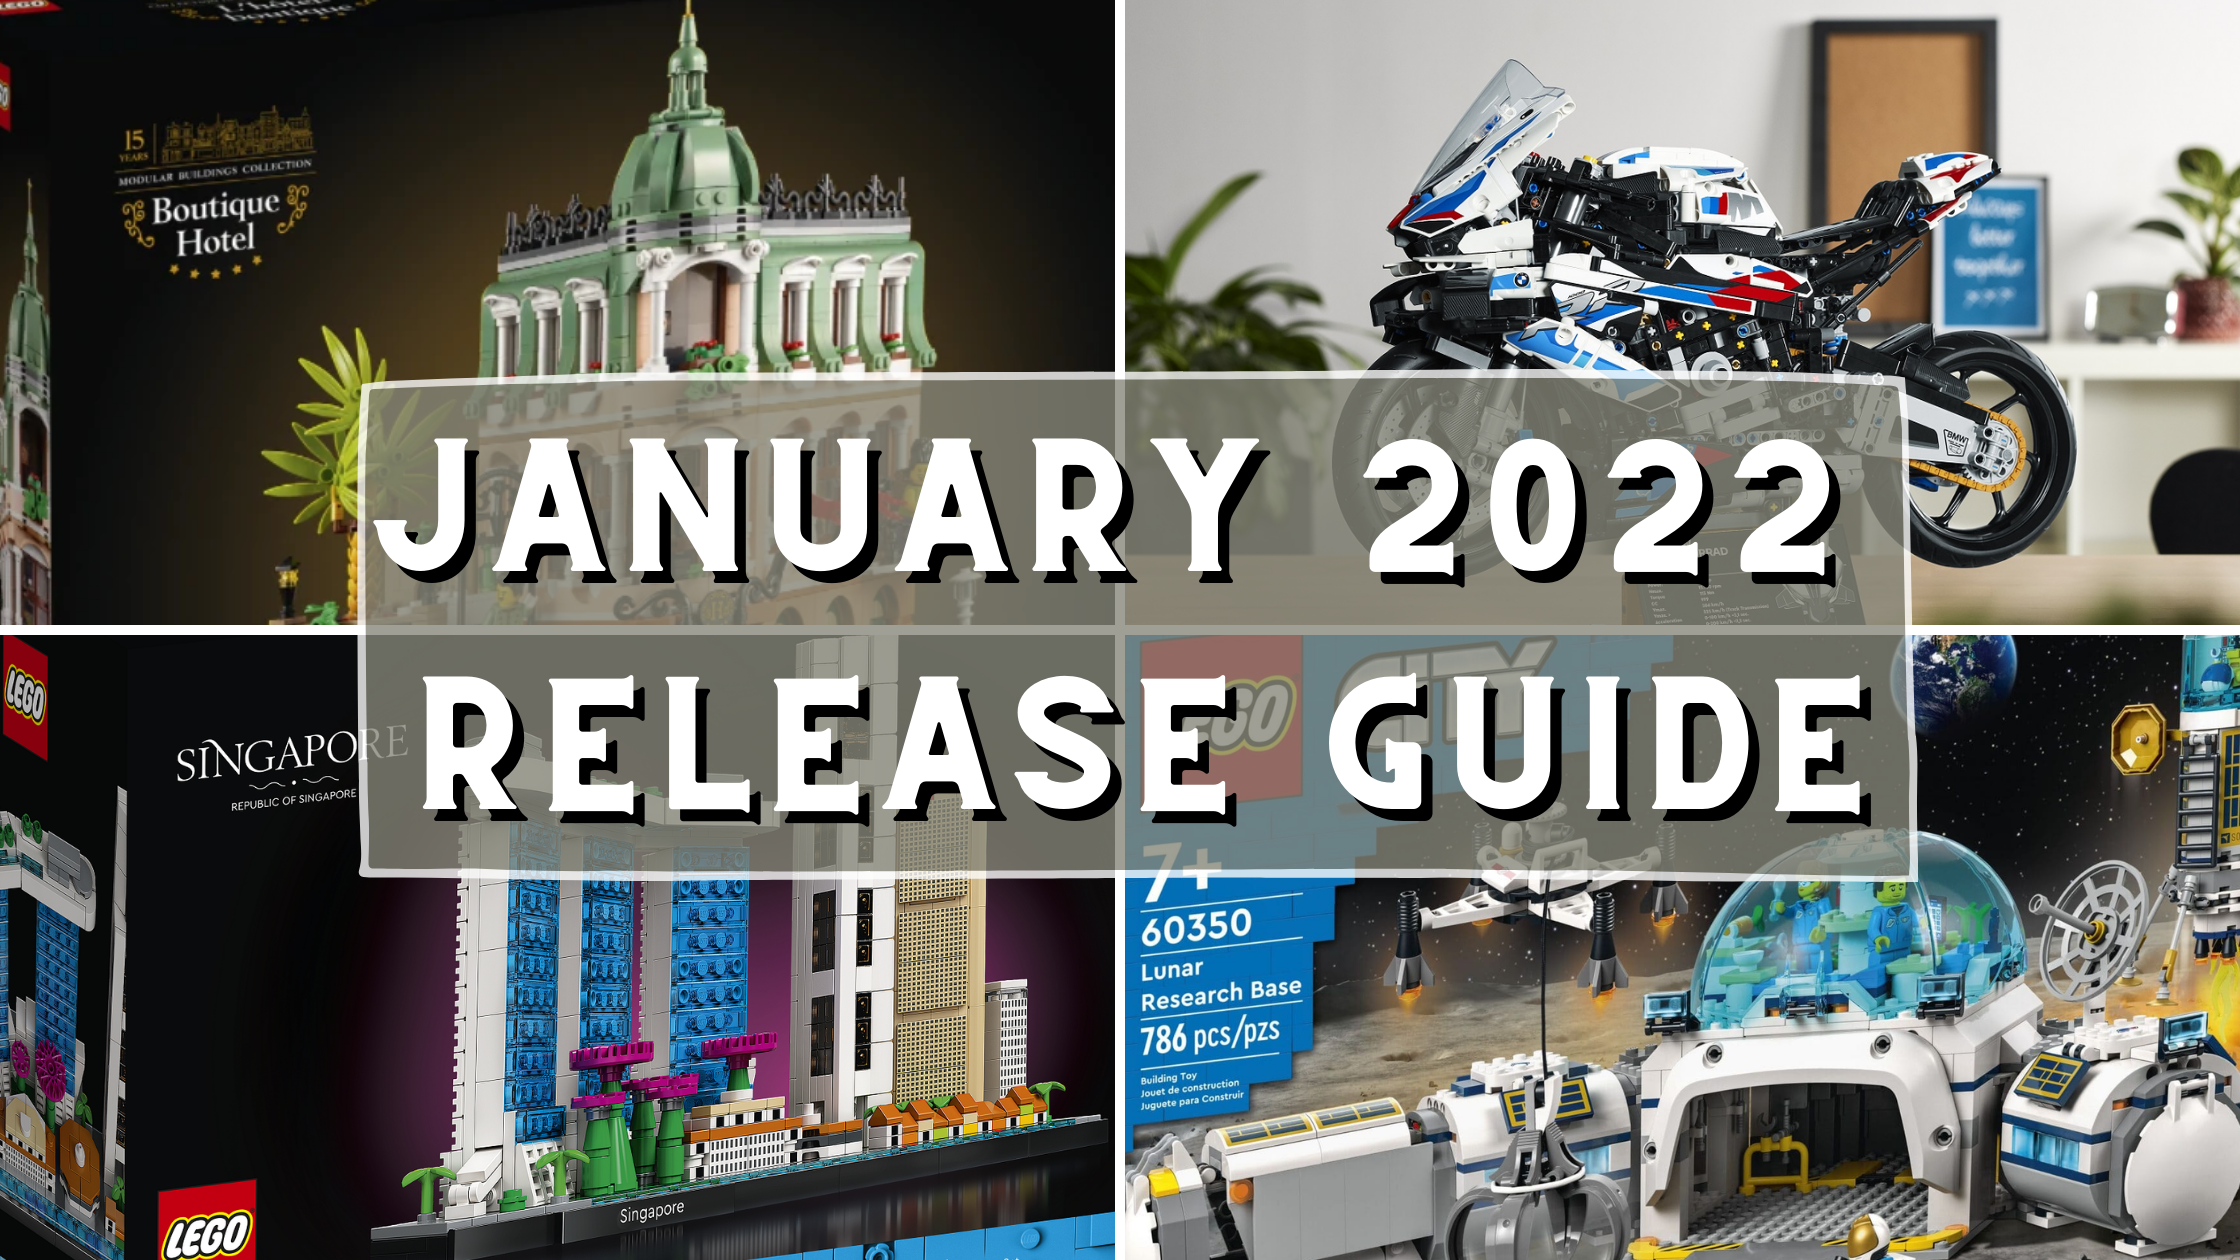 Lego February 2022 Calendar Lego February 2022 New Release Guide - Jay's Brick Blog